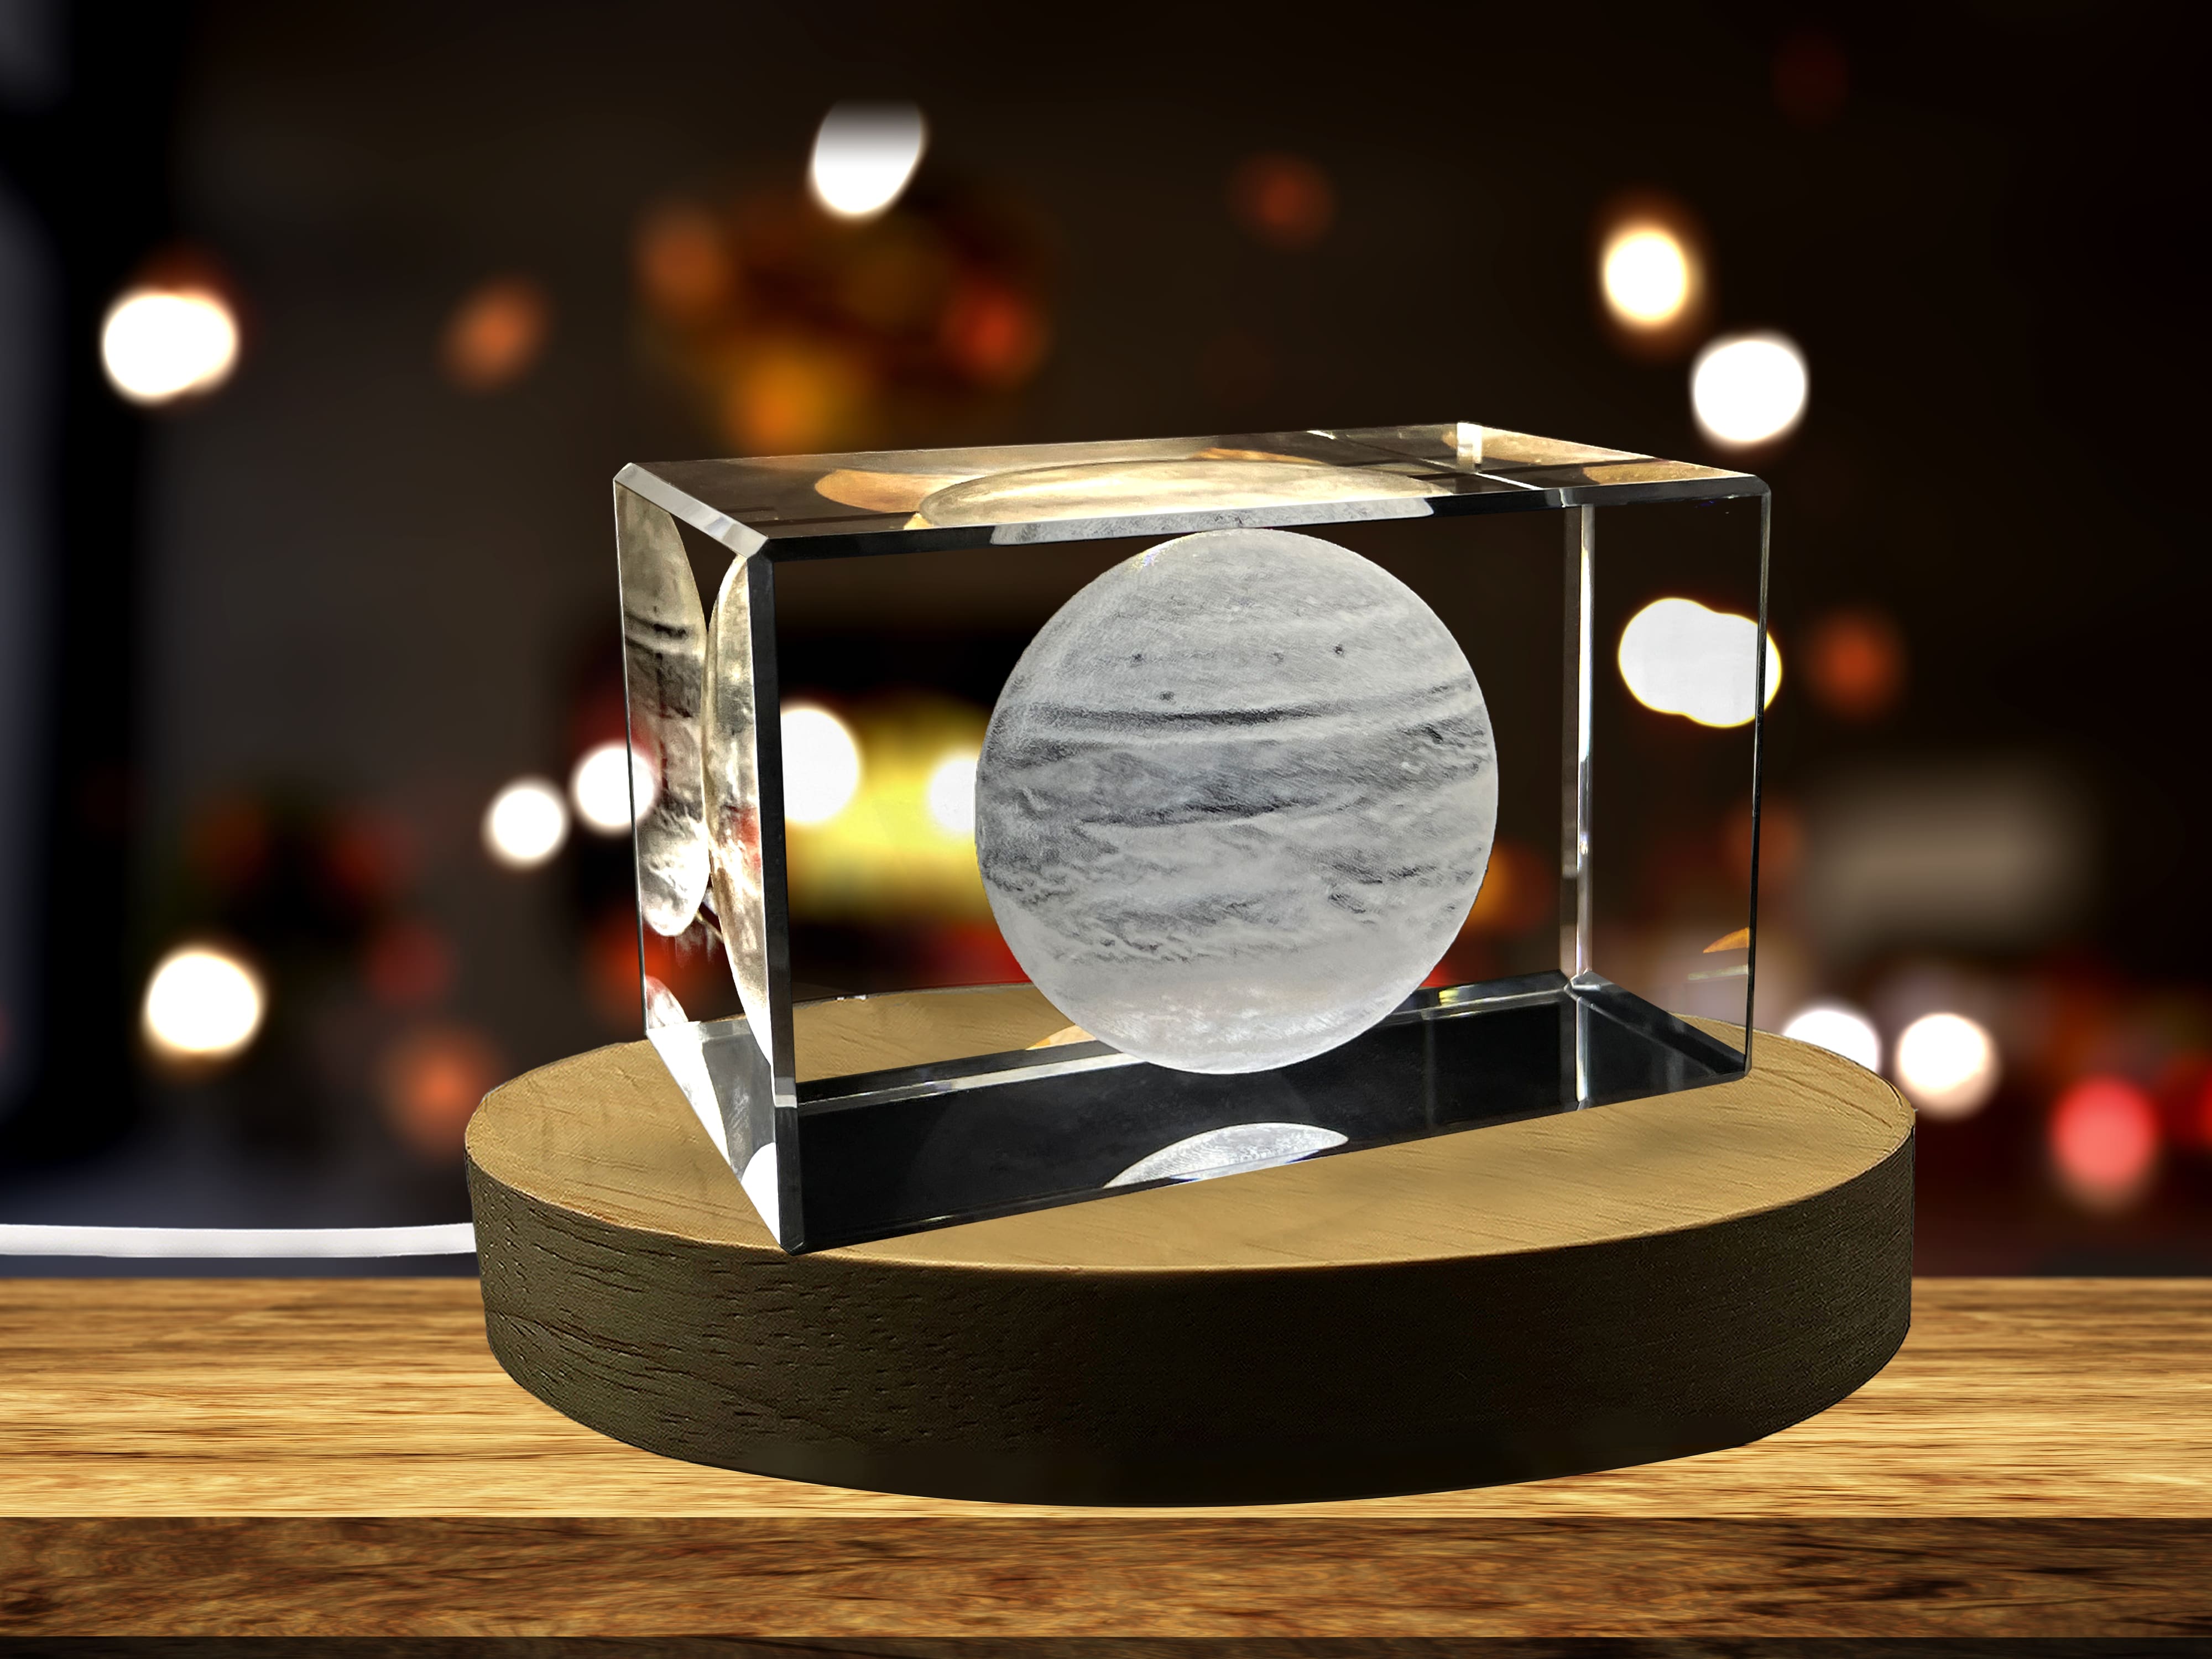 Venus 3D Engraved Crystal Novelty Decor A&B Crystal Collection